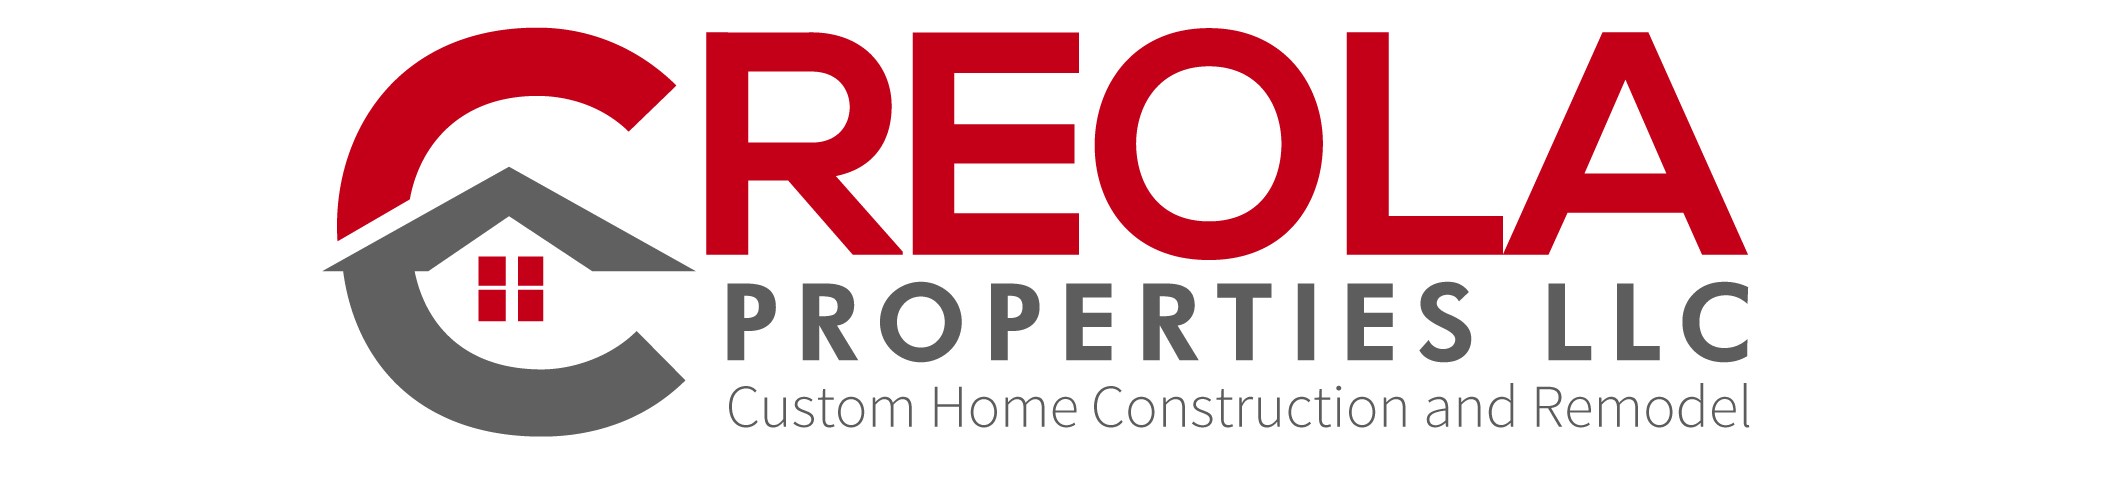 Creola Properties Logo